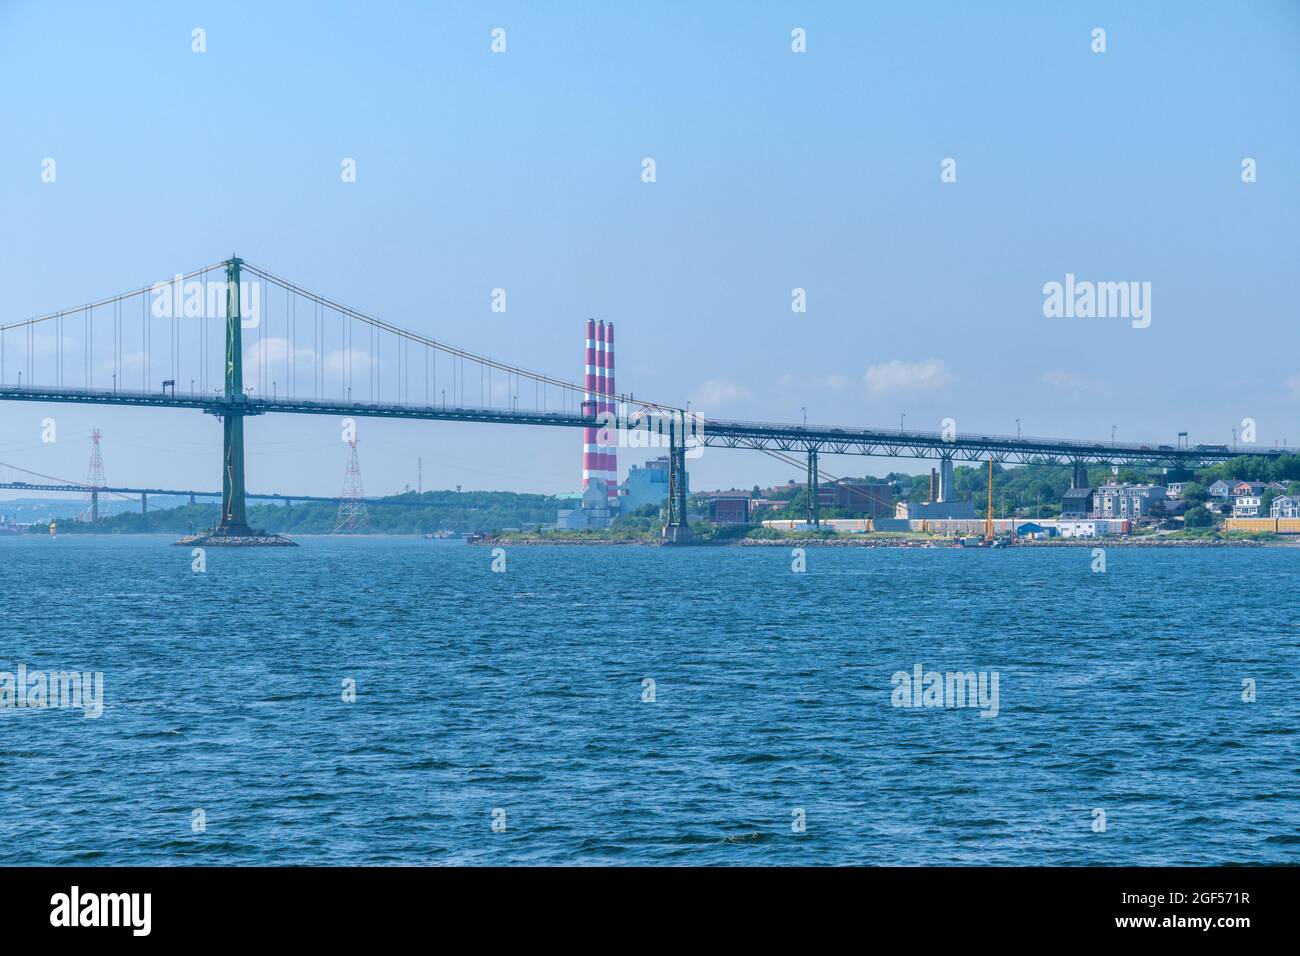 Halifax, Canada - 10 August 2021: Macdonald Bridge Stock Photo